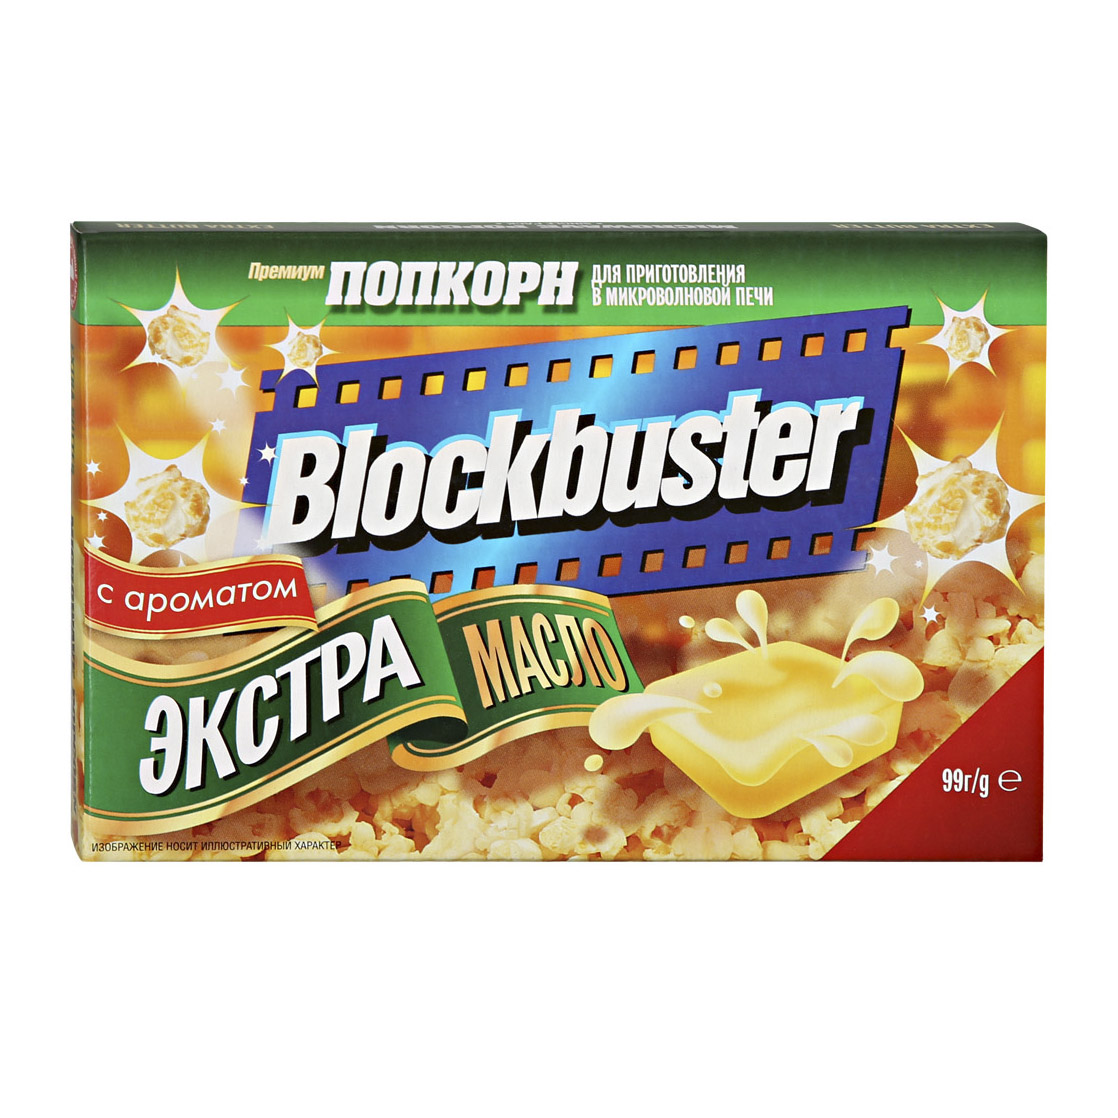 Попкорн Blockbuster Экстра масло 99 г попкорн blockbuster чеддер сыр 99 г